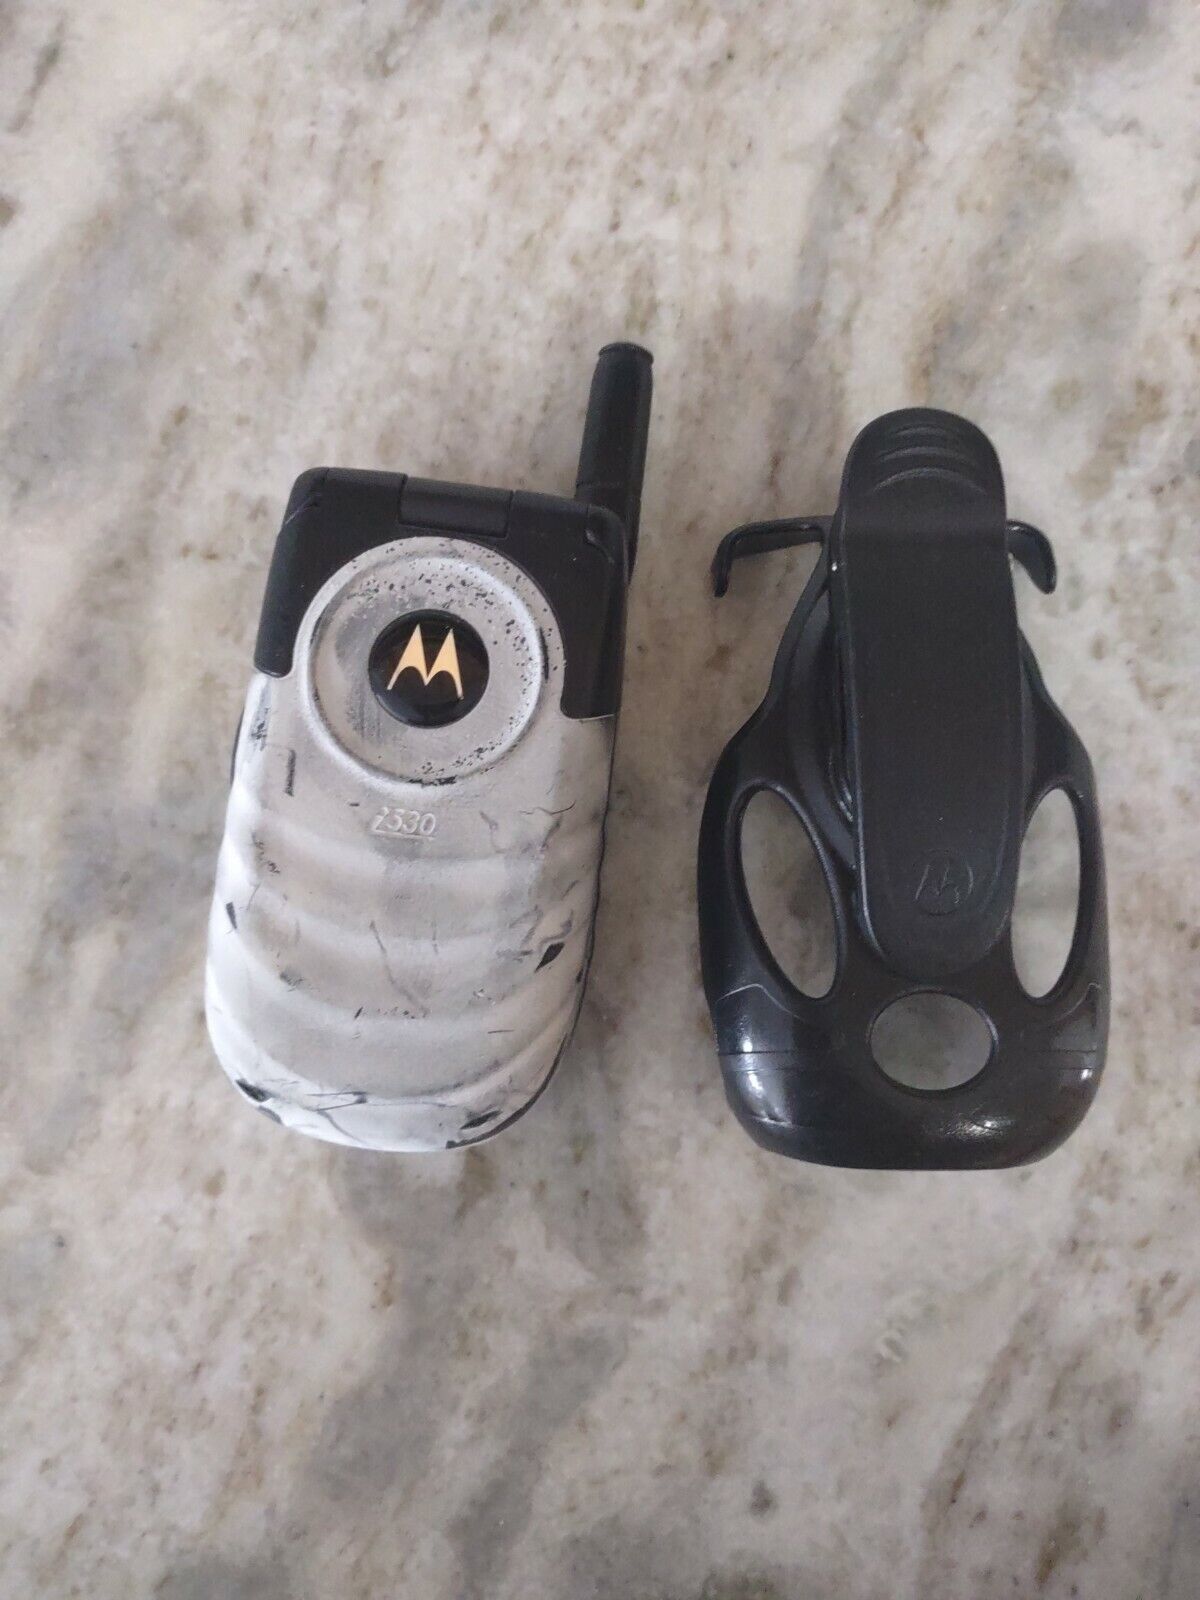 Motorola i530 - Black (Unlocked) Cellular Phone - $78.09